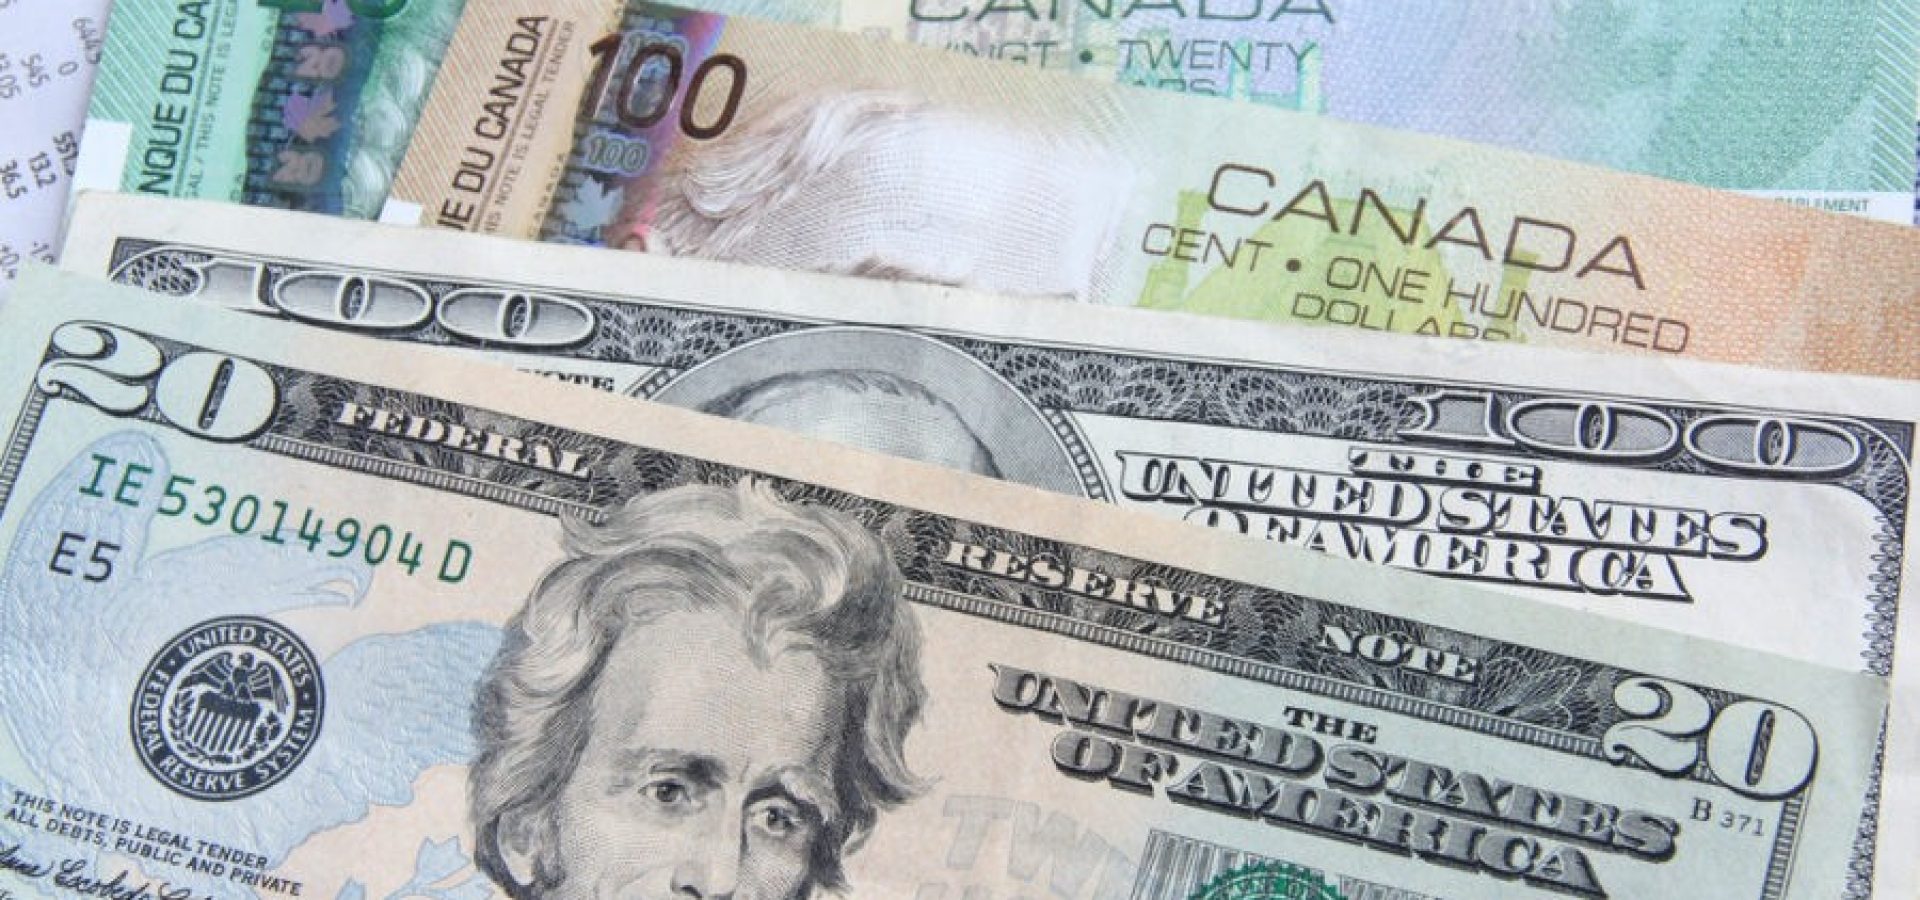 US Dollar and Canadian Dollar Banknotes